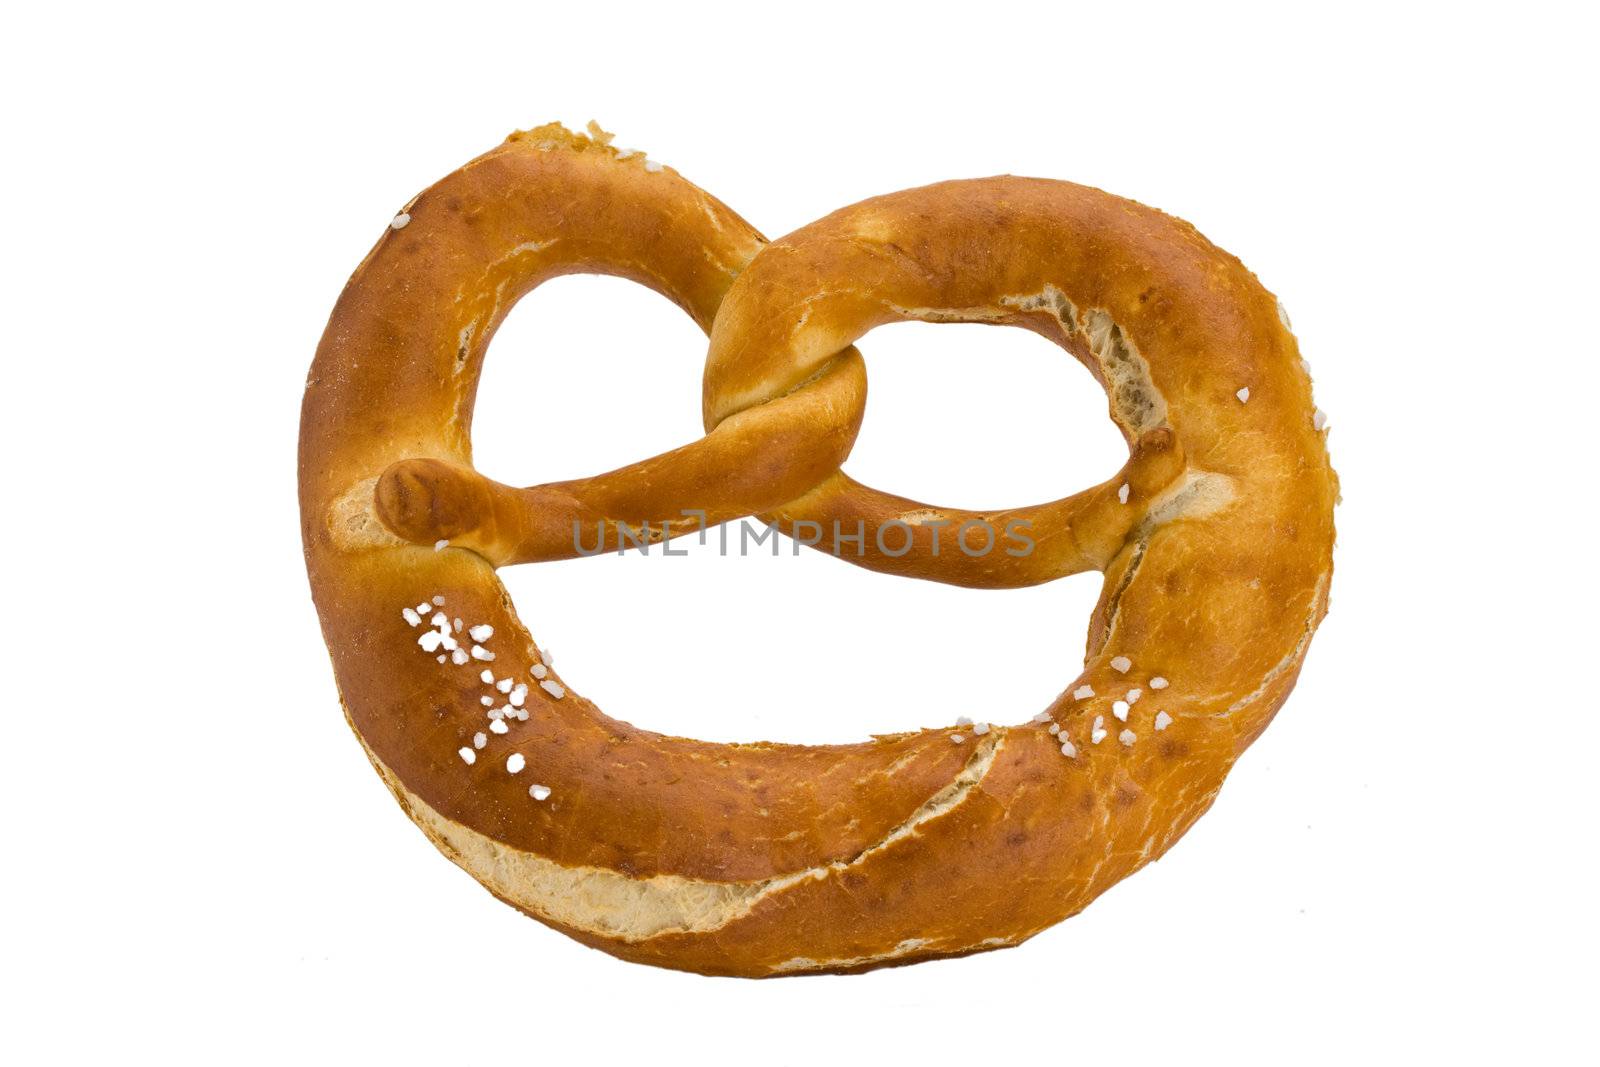 bavarian pretzel isolated on white background by bernjuer